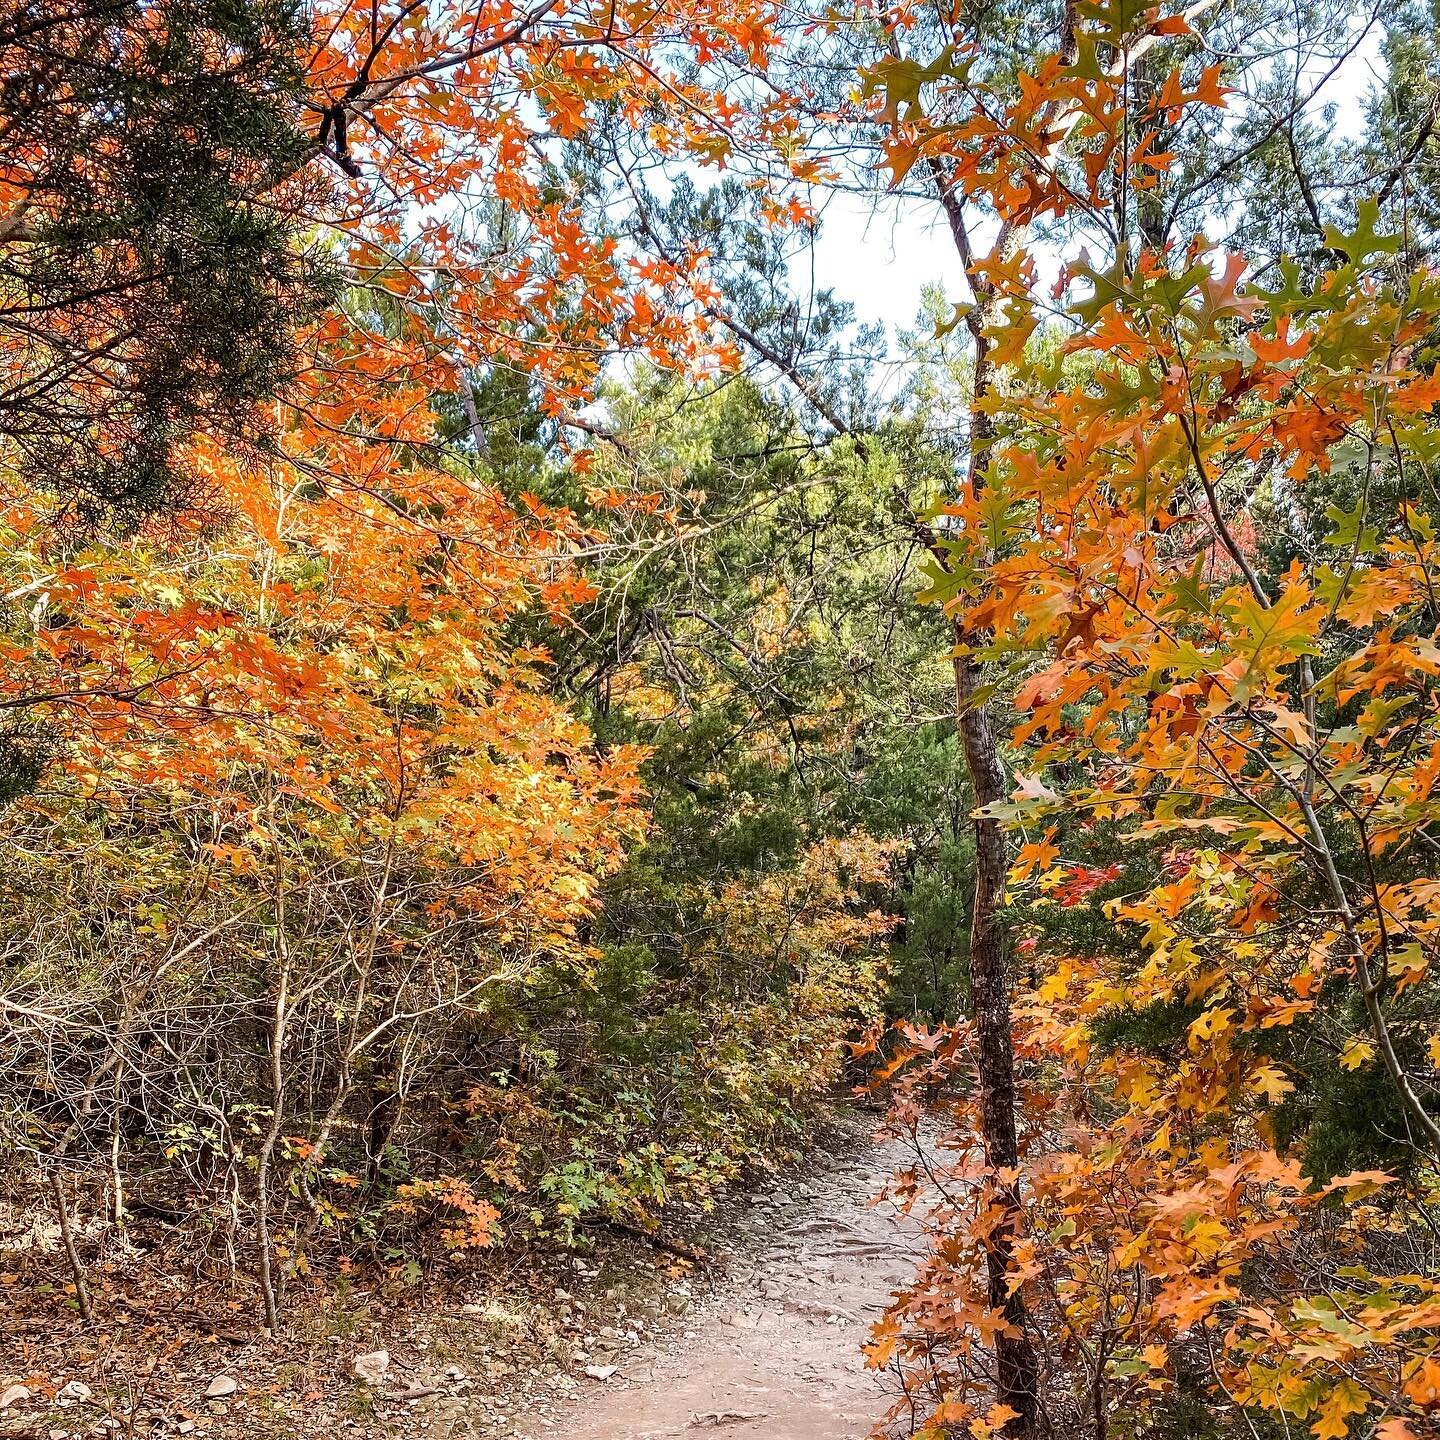 Great hiking and fall colors at Cedar Ridge Preserve 🍁 #cedarridgepreserve #hiking #fallcolors #fallfoliage #dallas #roadjesstravels #texashiking